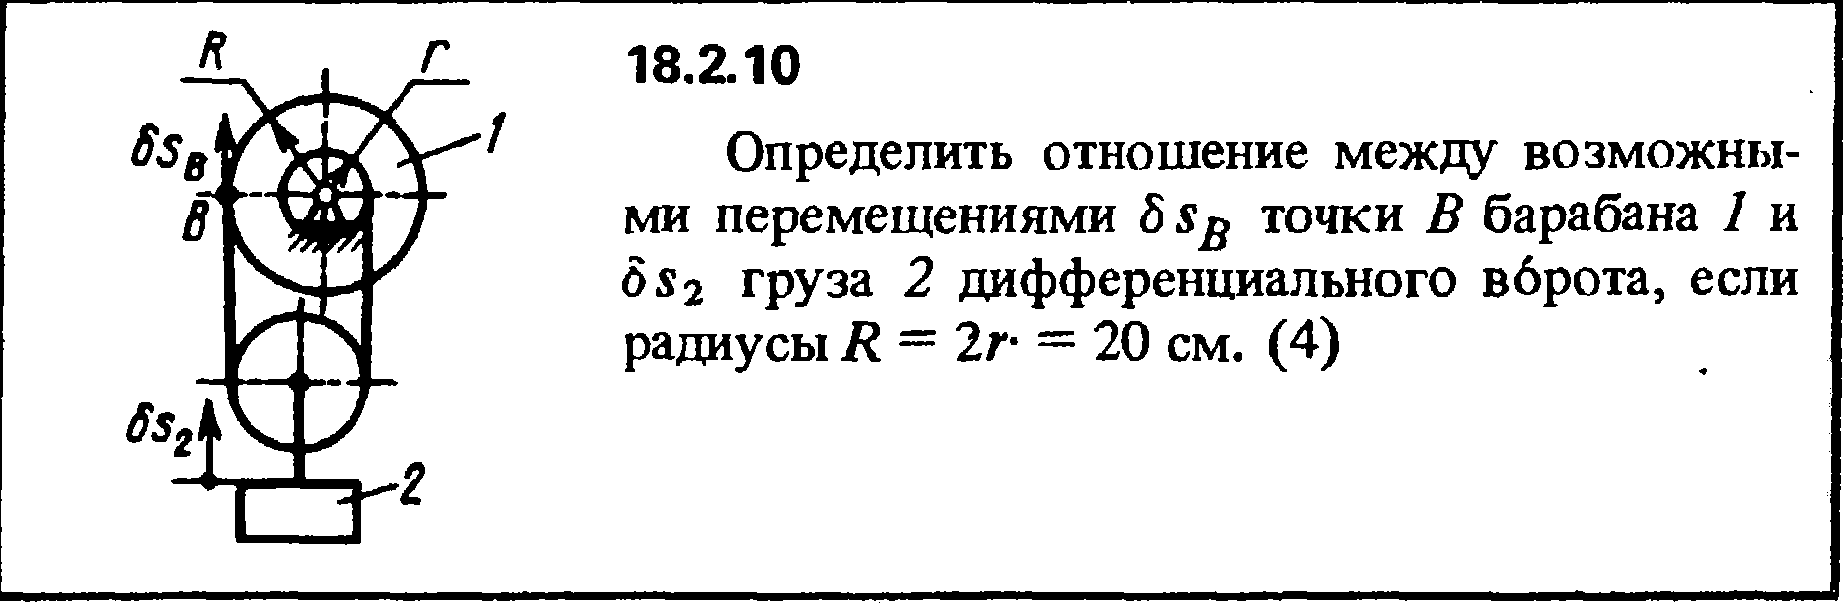 Решение 18.3.10 из сборника (решебника) Кепе О.Е. 1989